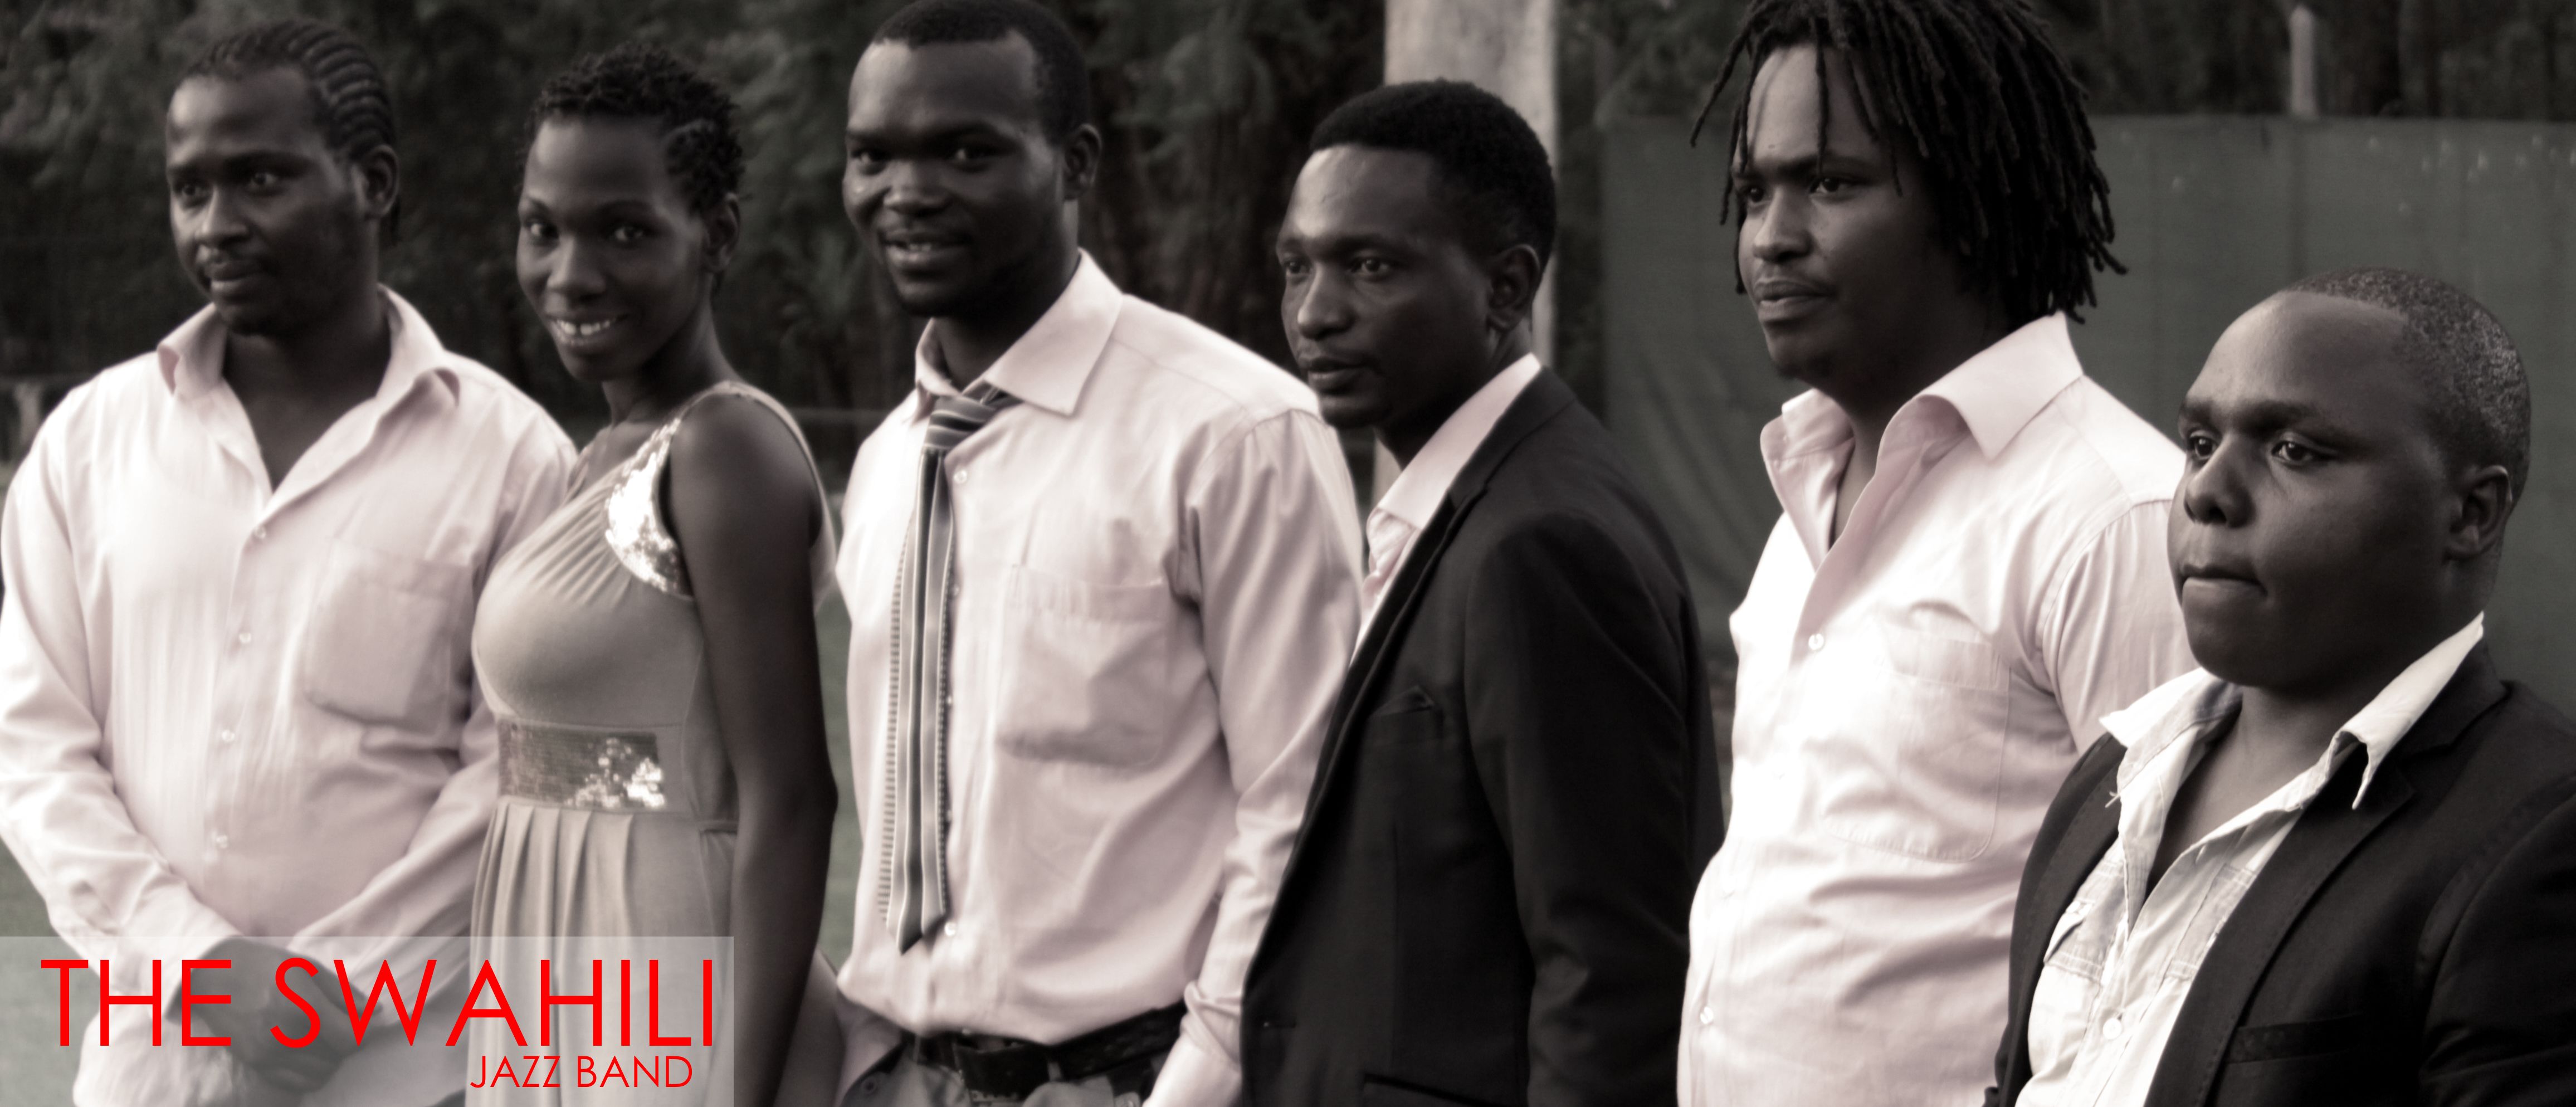 The Swahili Jazz Band